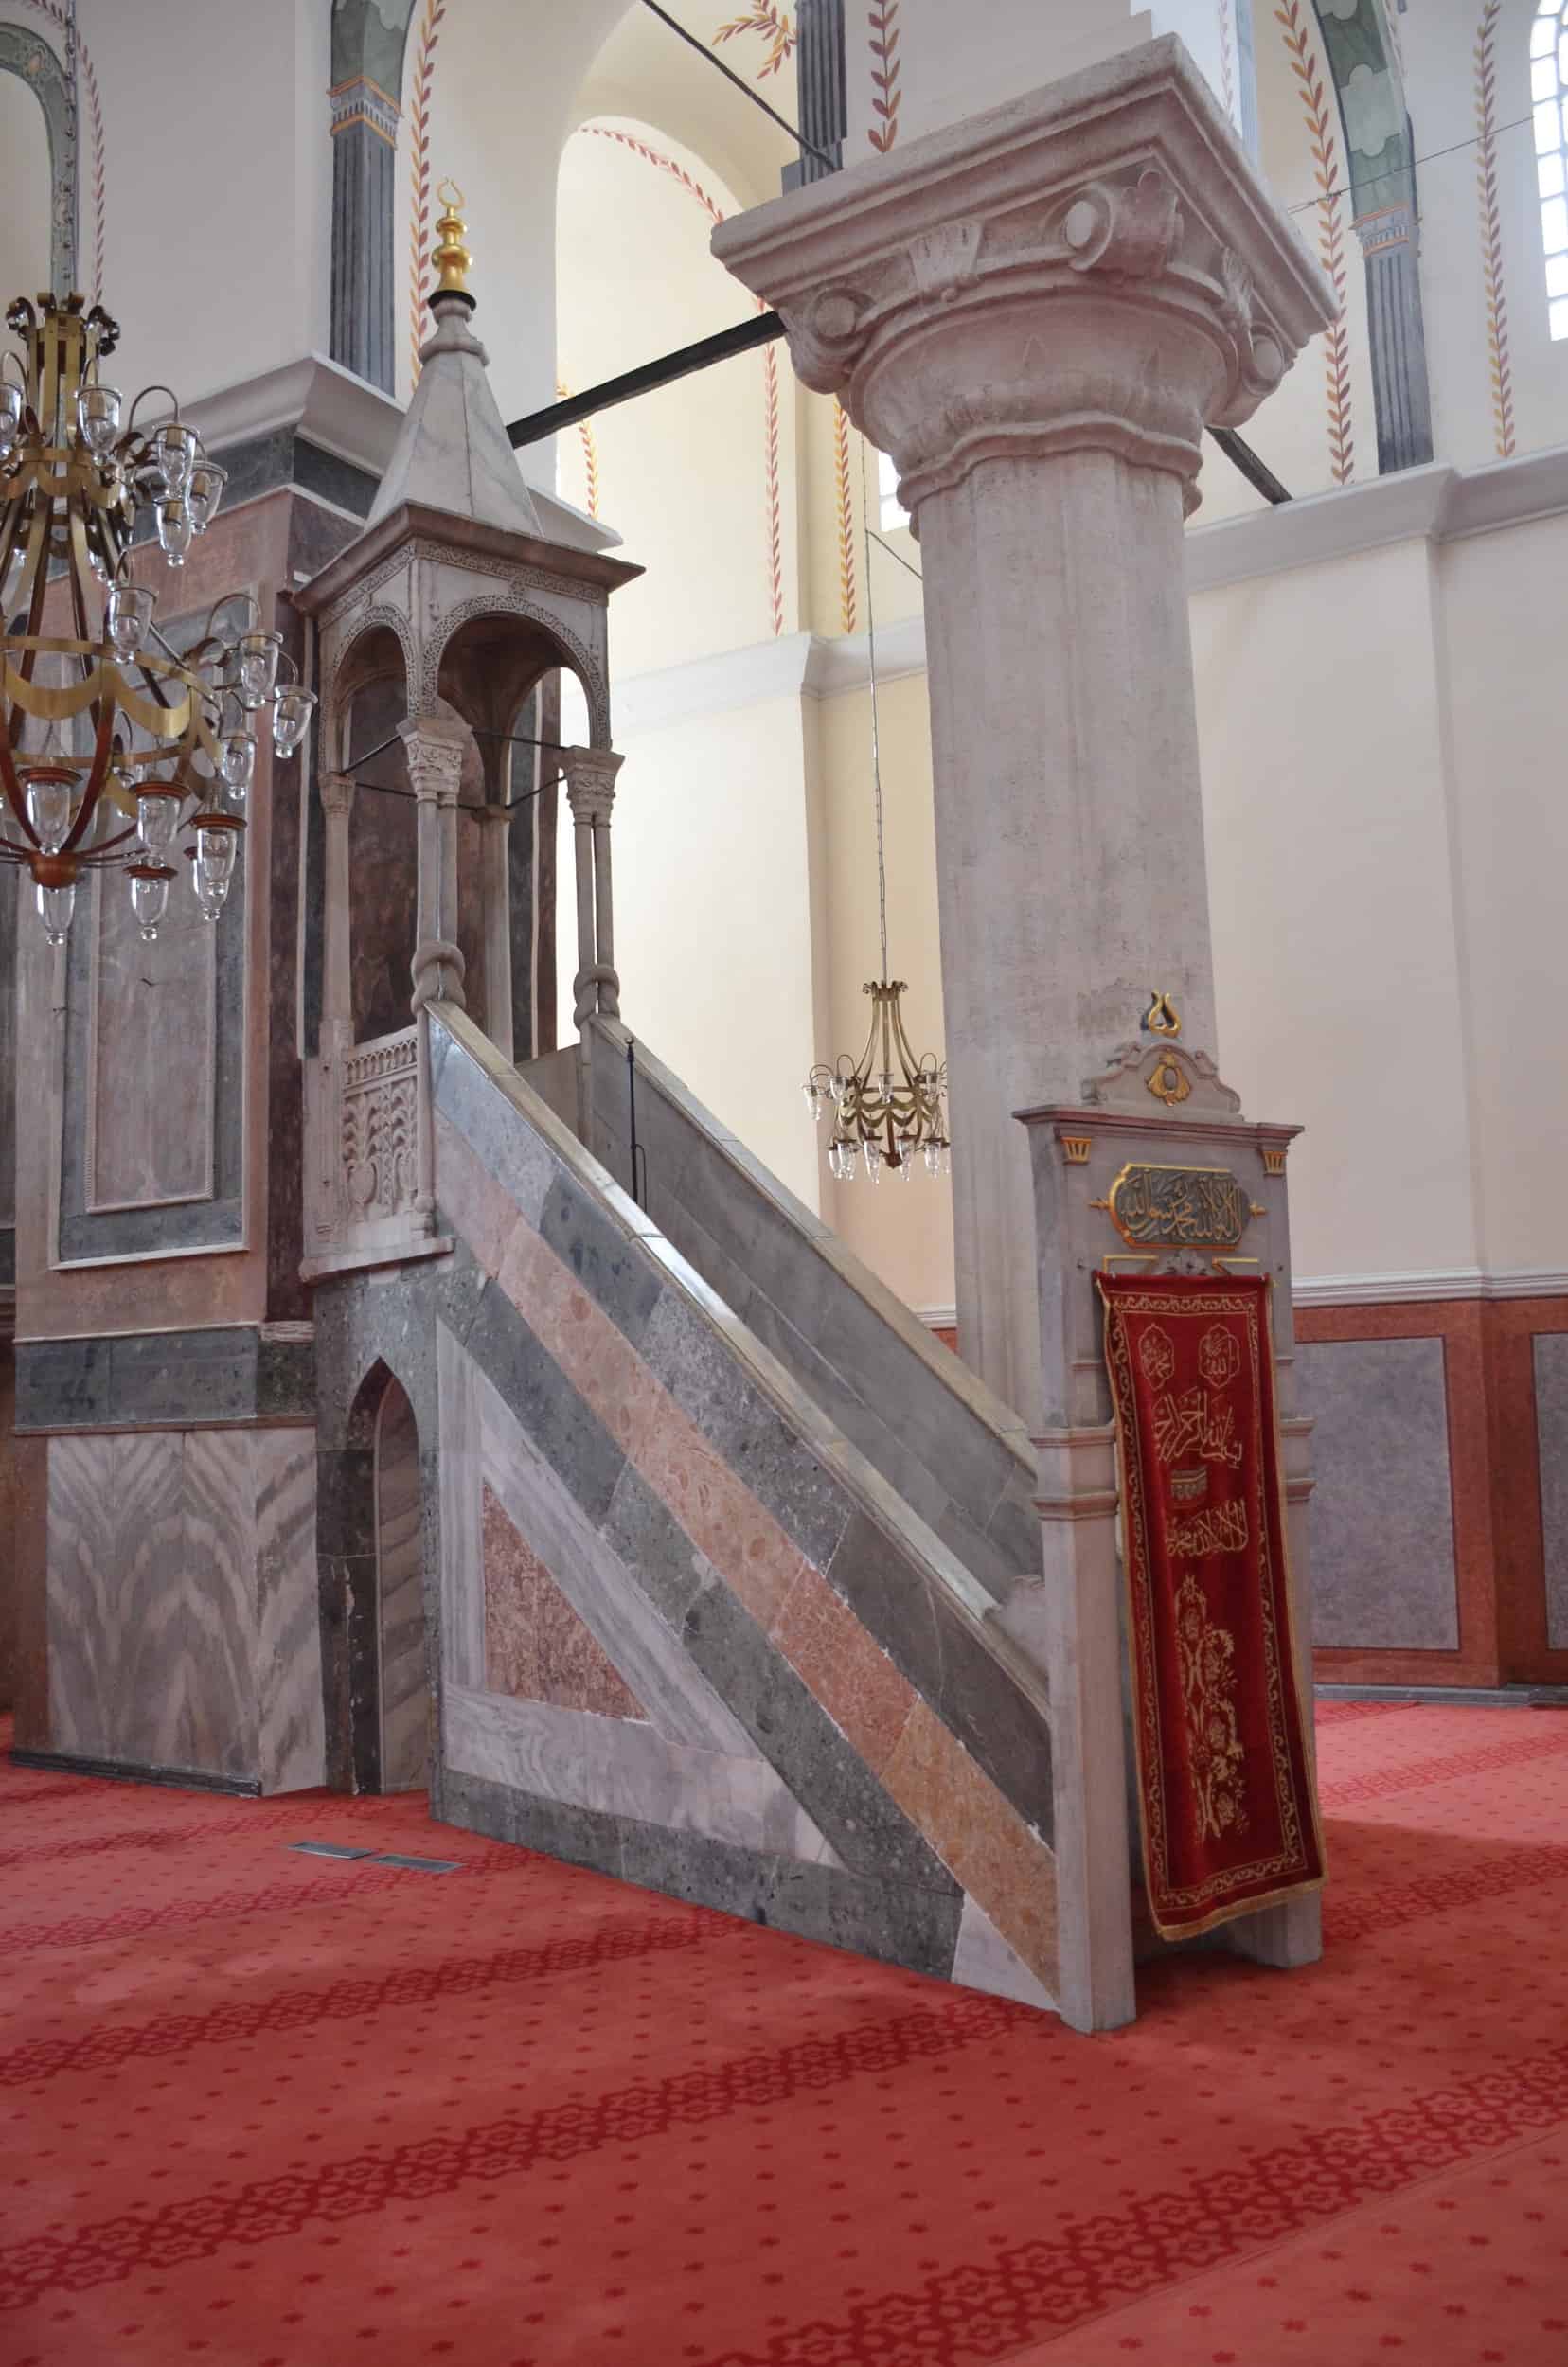 Minbar in the south church of the Zeyrek Mosque in Zeyrek, Istanbul, Turkey